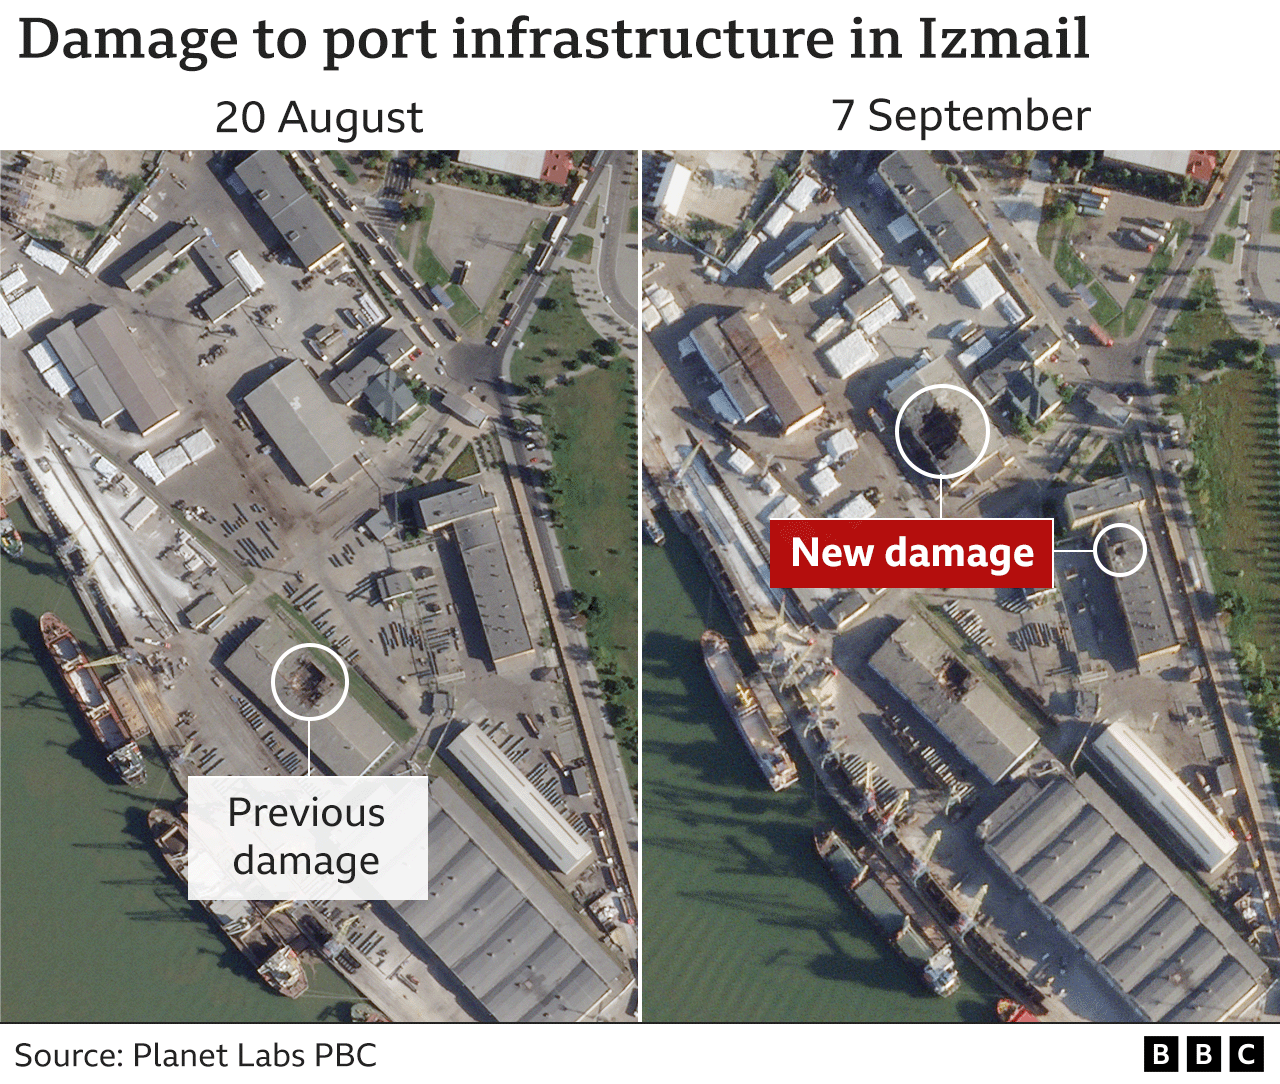 Damage at Izmail port